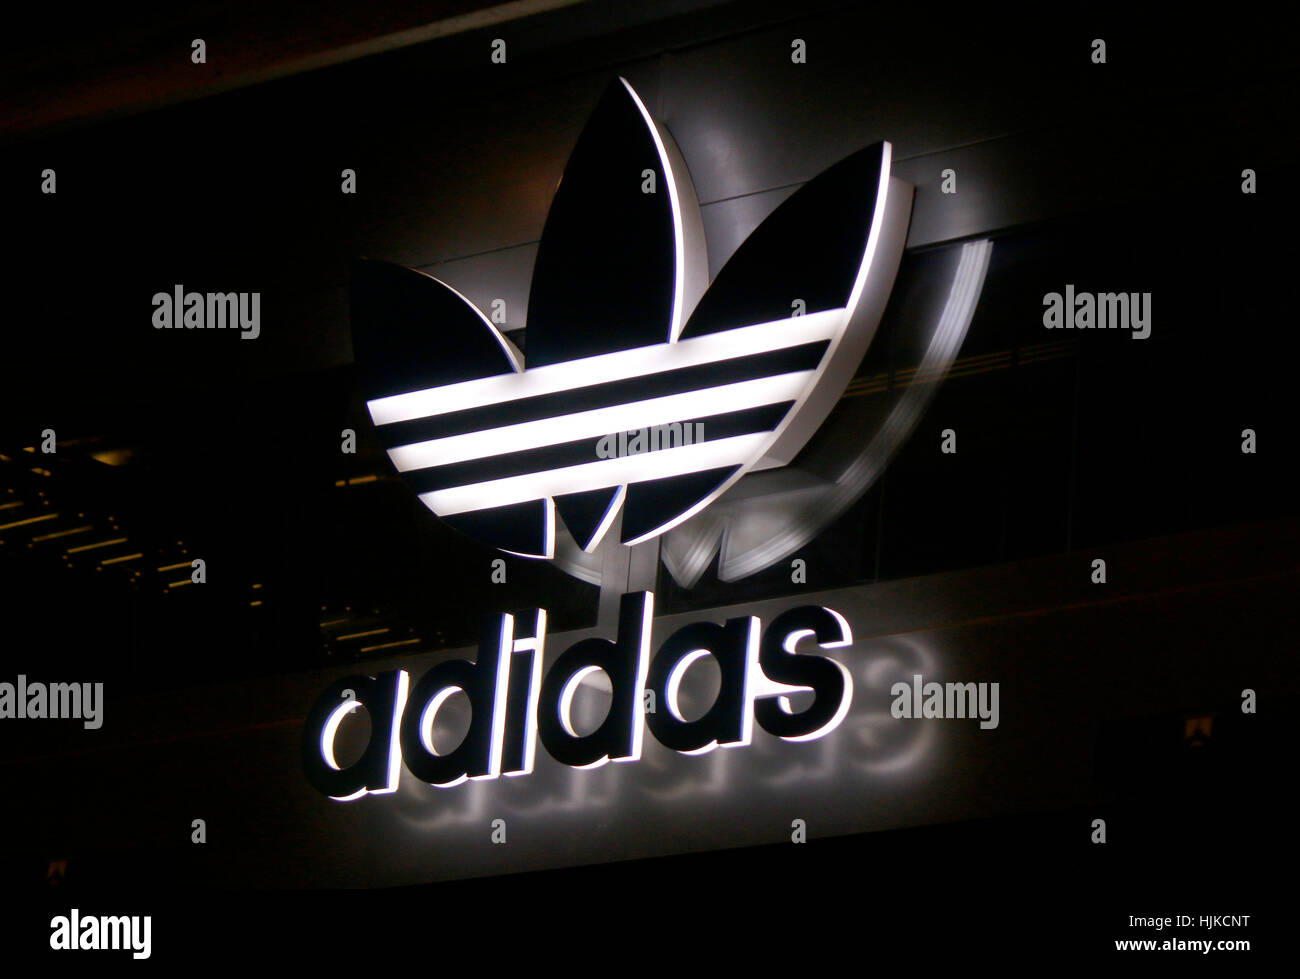 das Logo der Marke "Adidas", Berlin Stock Photo - Alamy